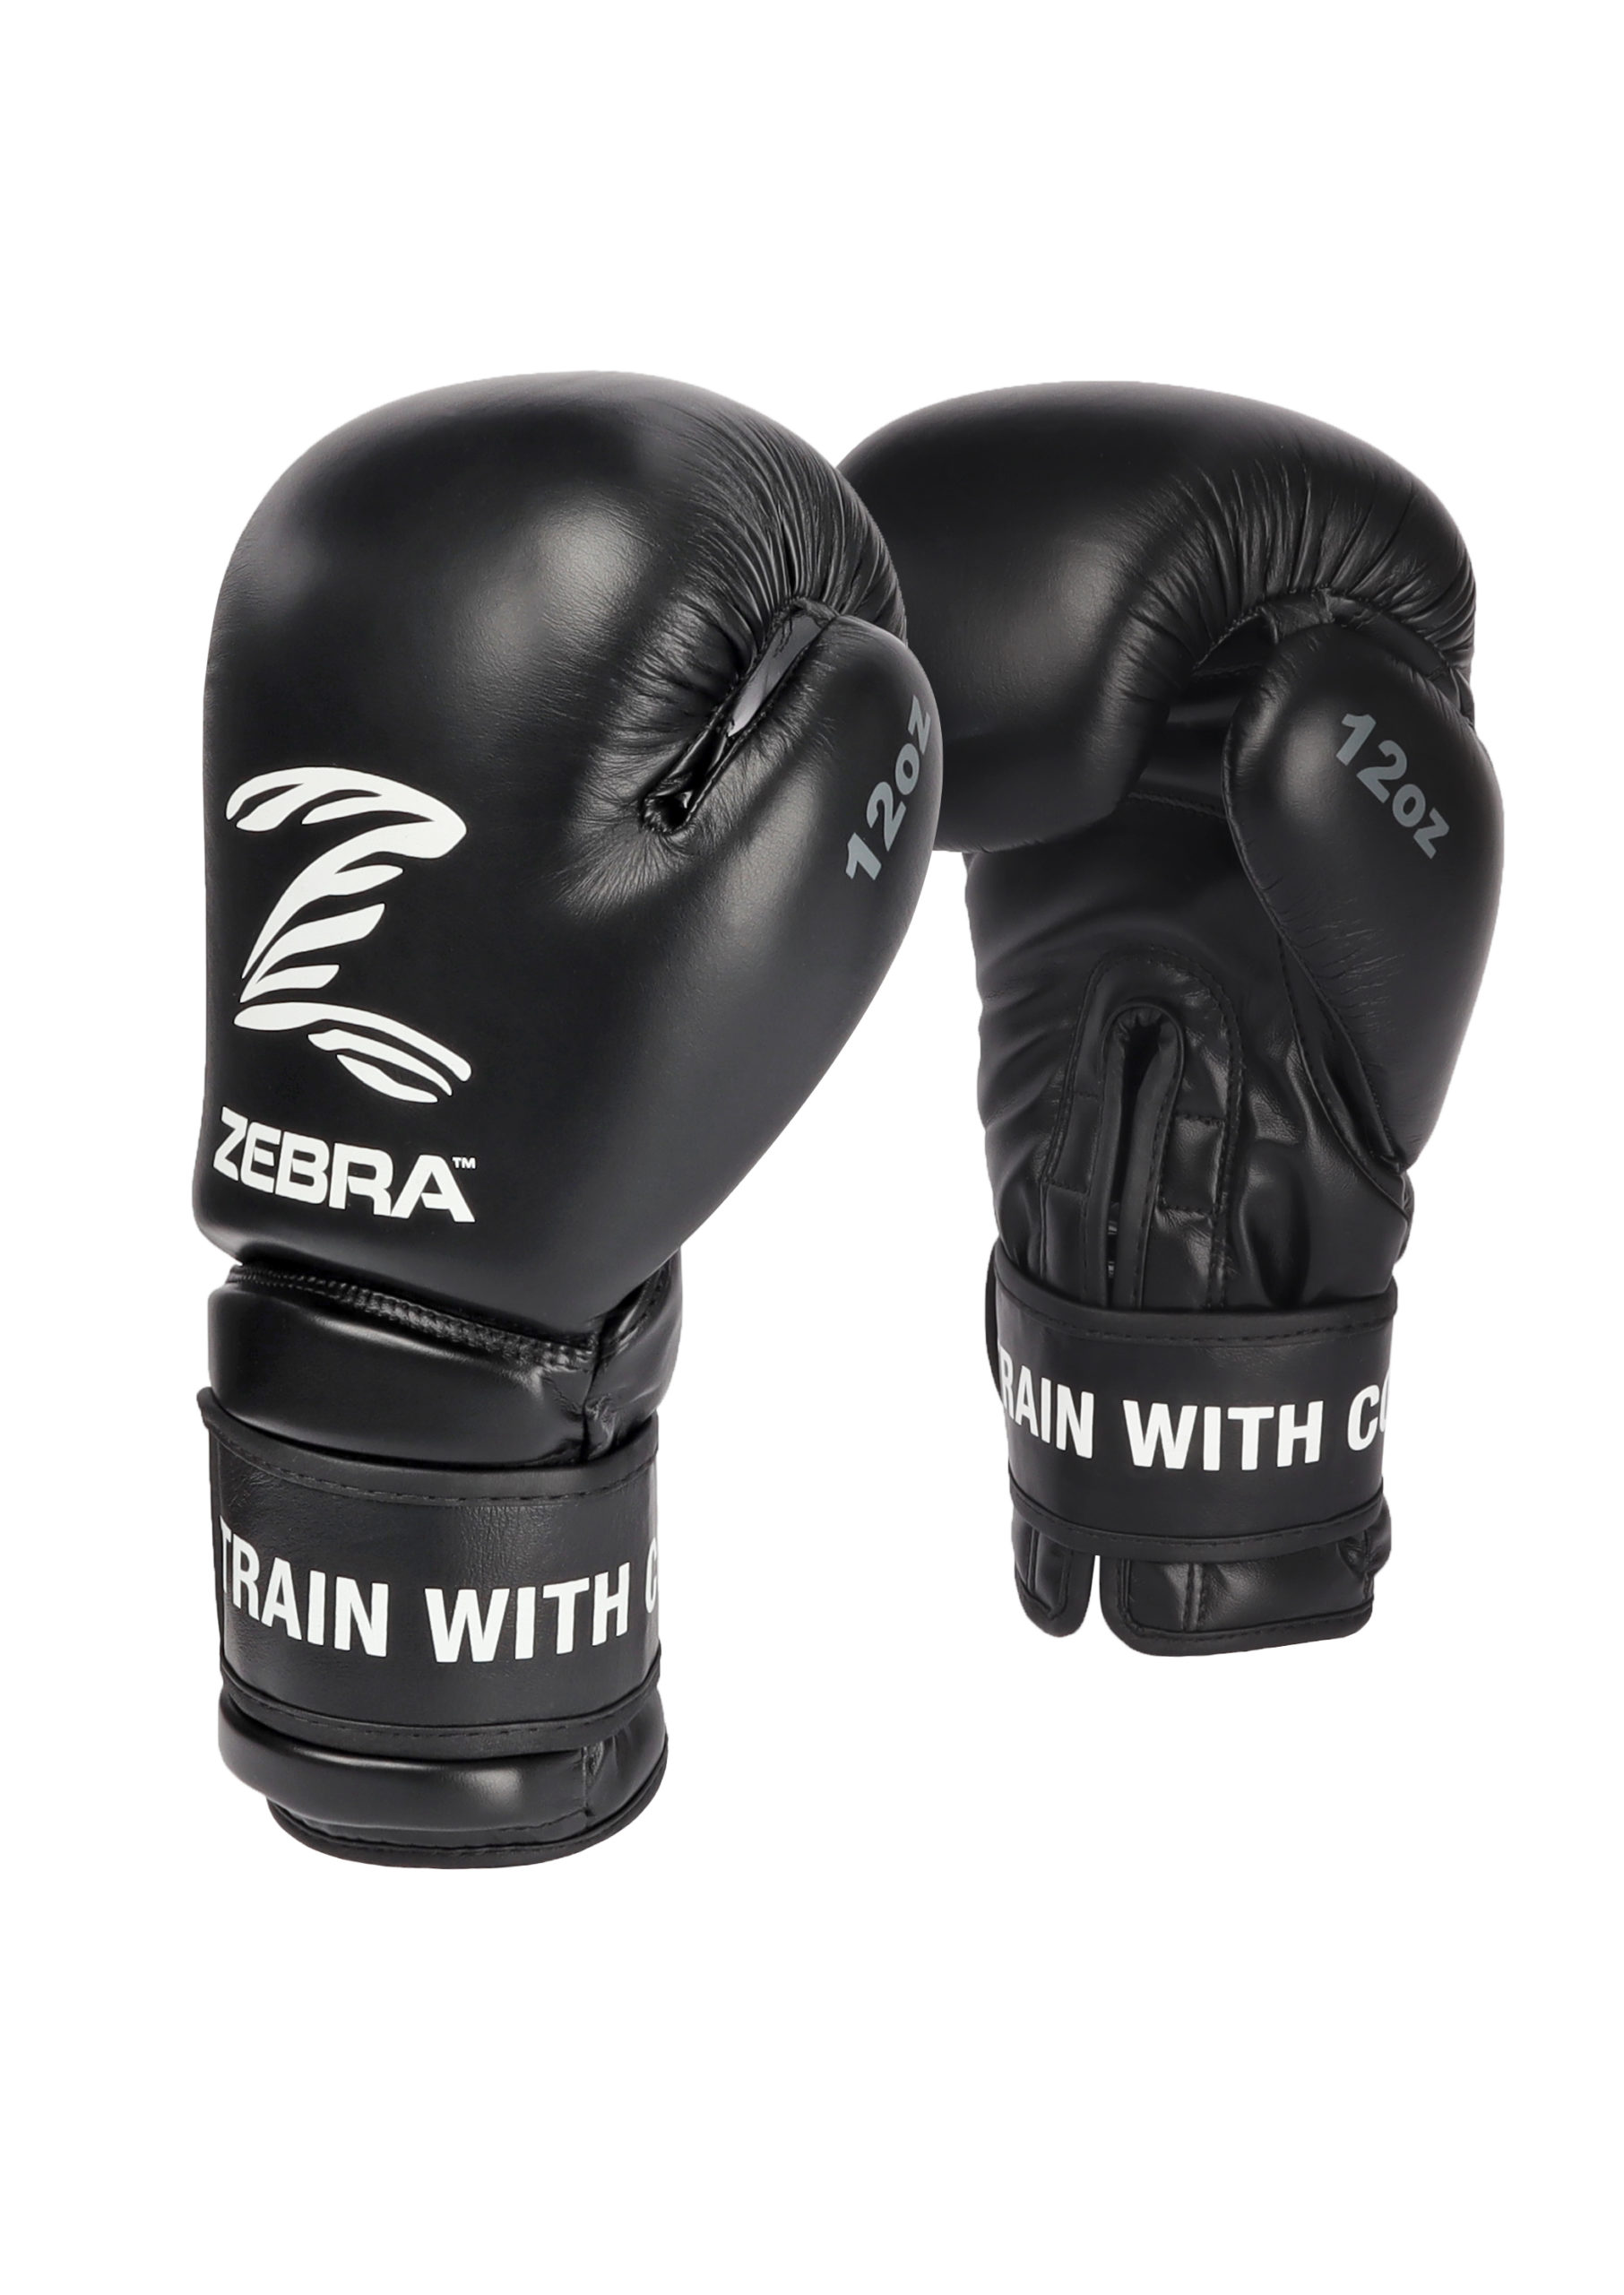 ZEBRA Performance Training Gloves